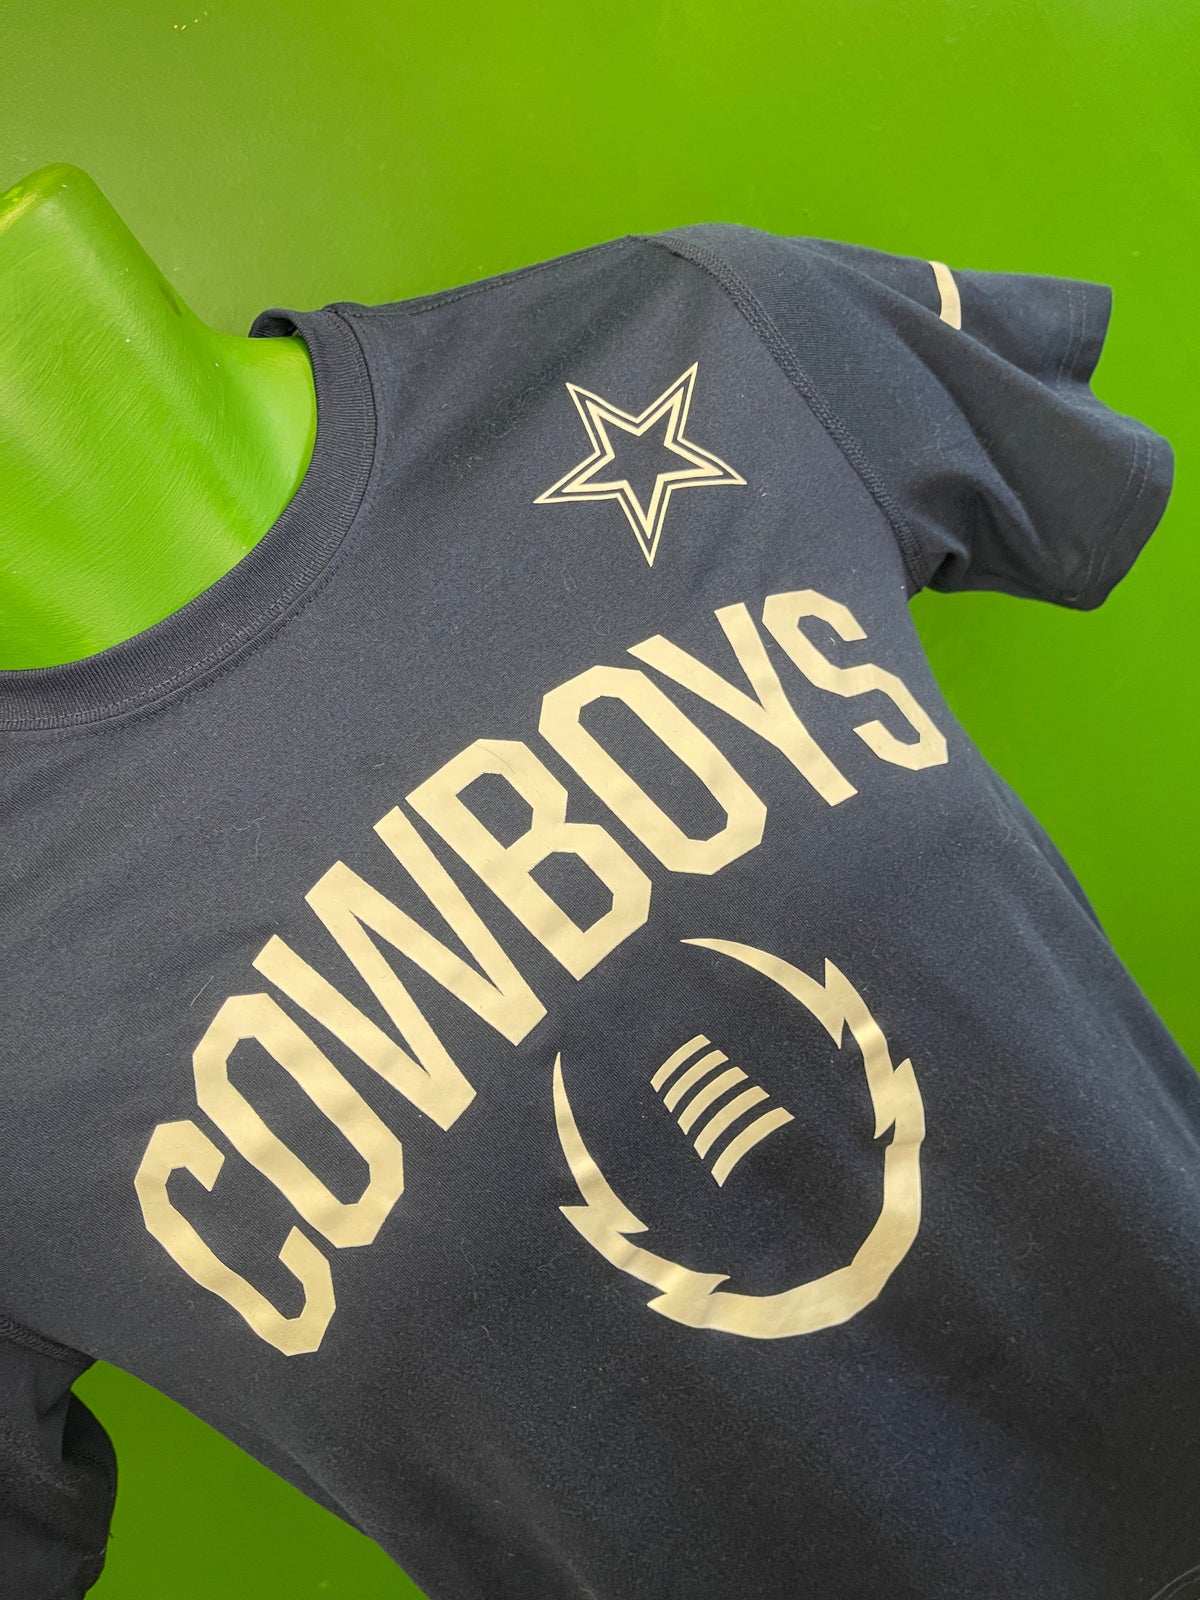 NFL Dallas Cowboys T-Shirt Youth Medium 10-12